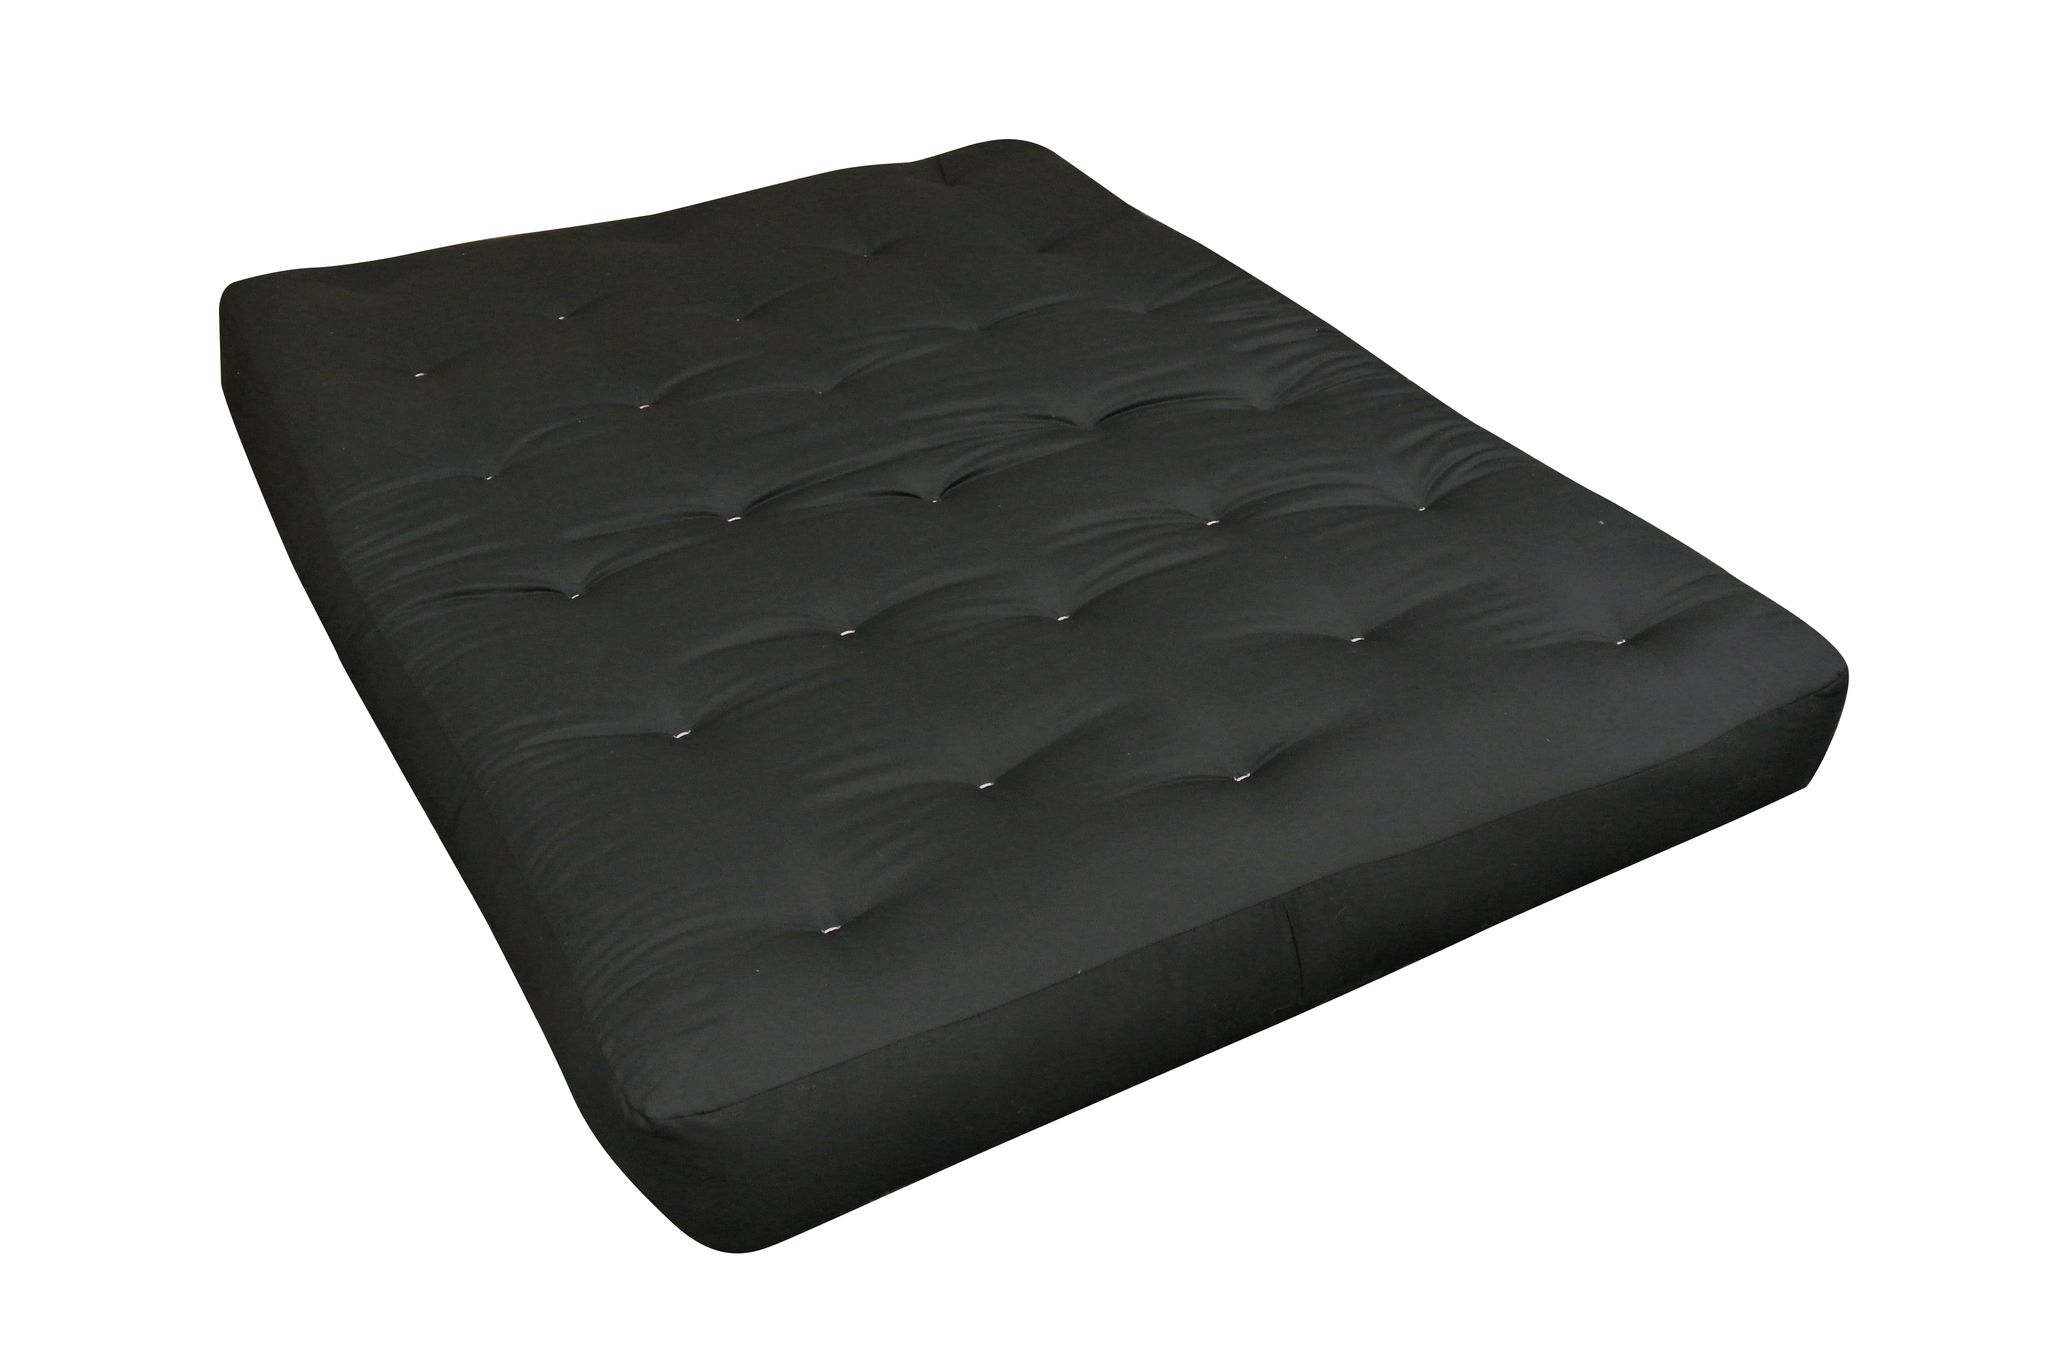 108 10 In. Euro Coil Duct Futon Mattress, Black - Full Size